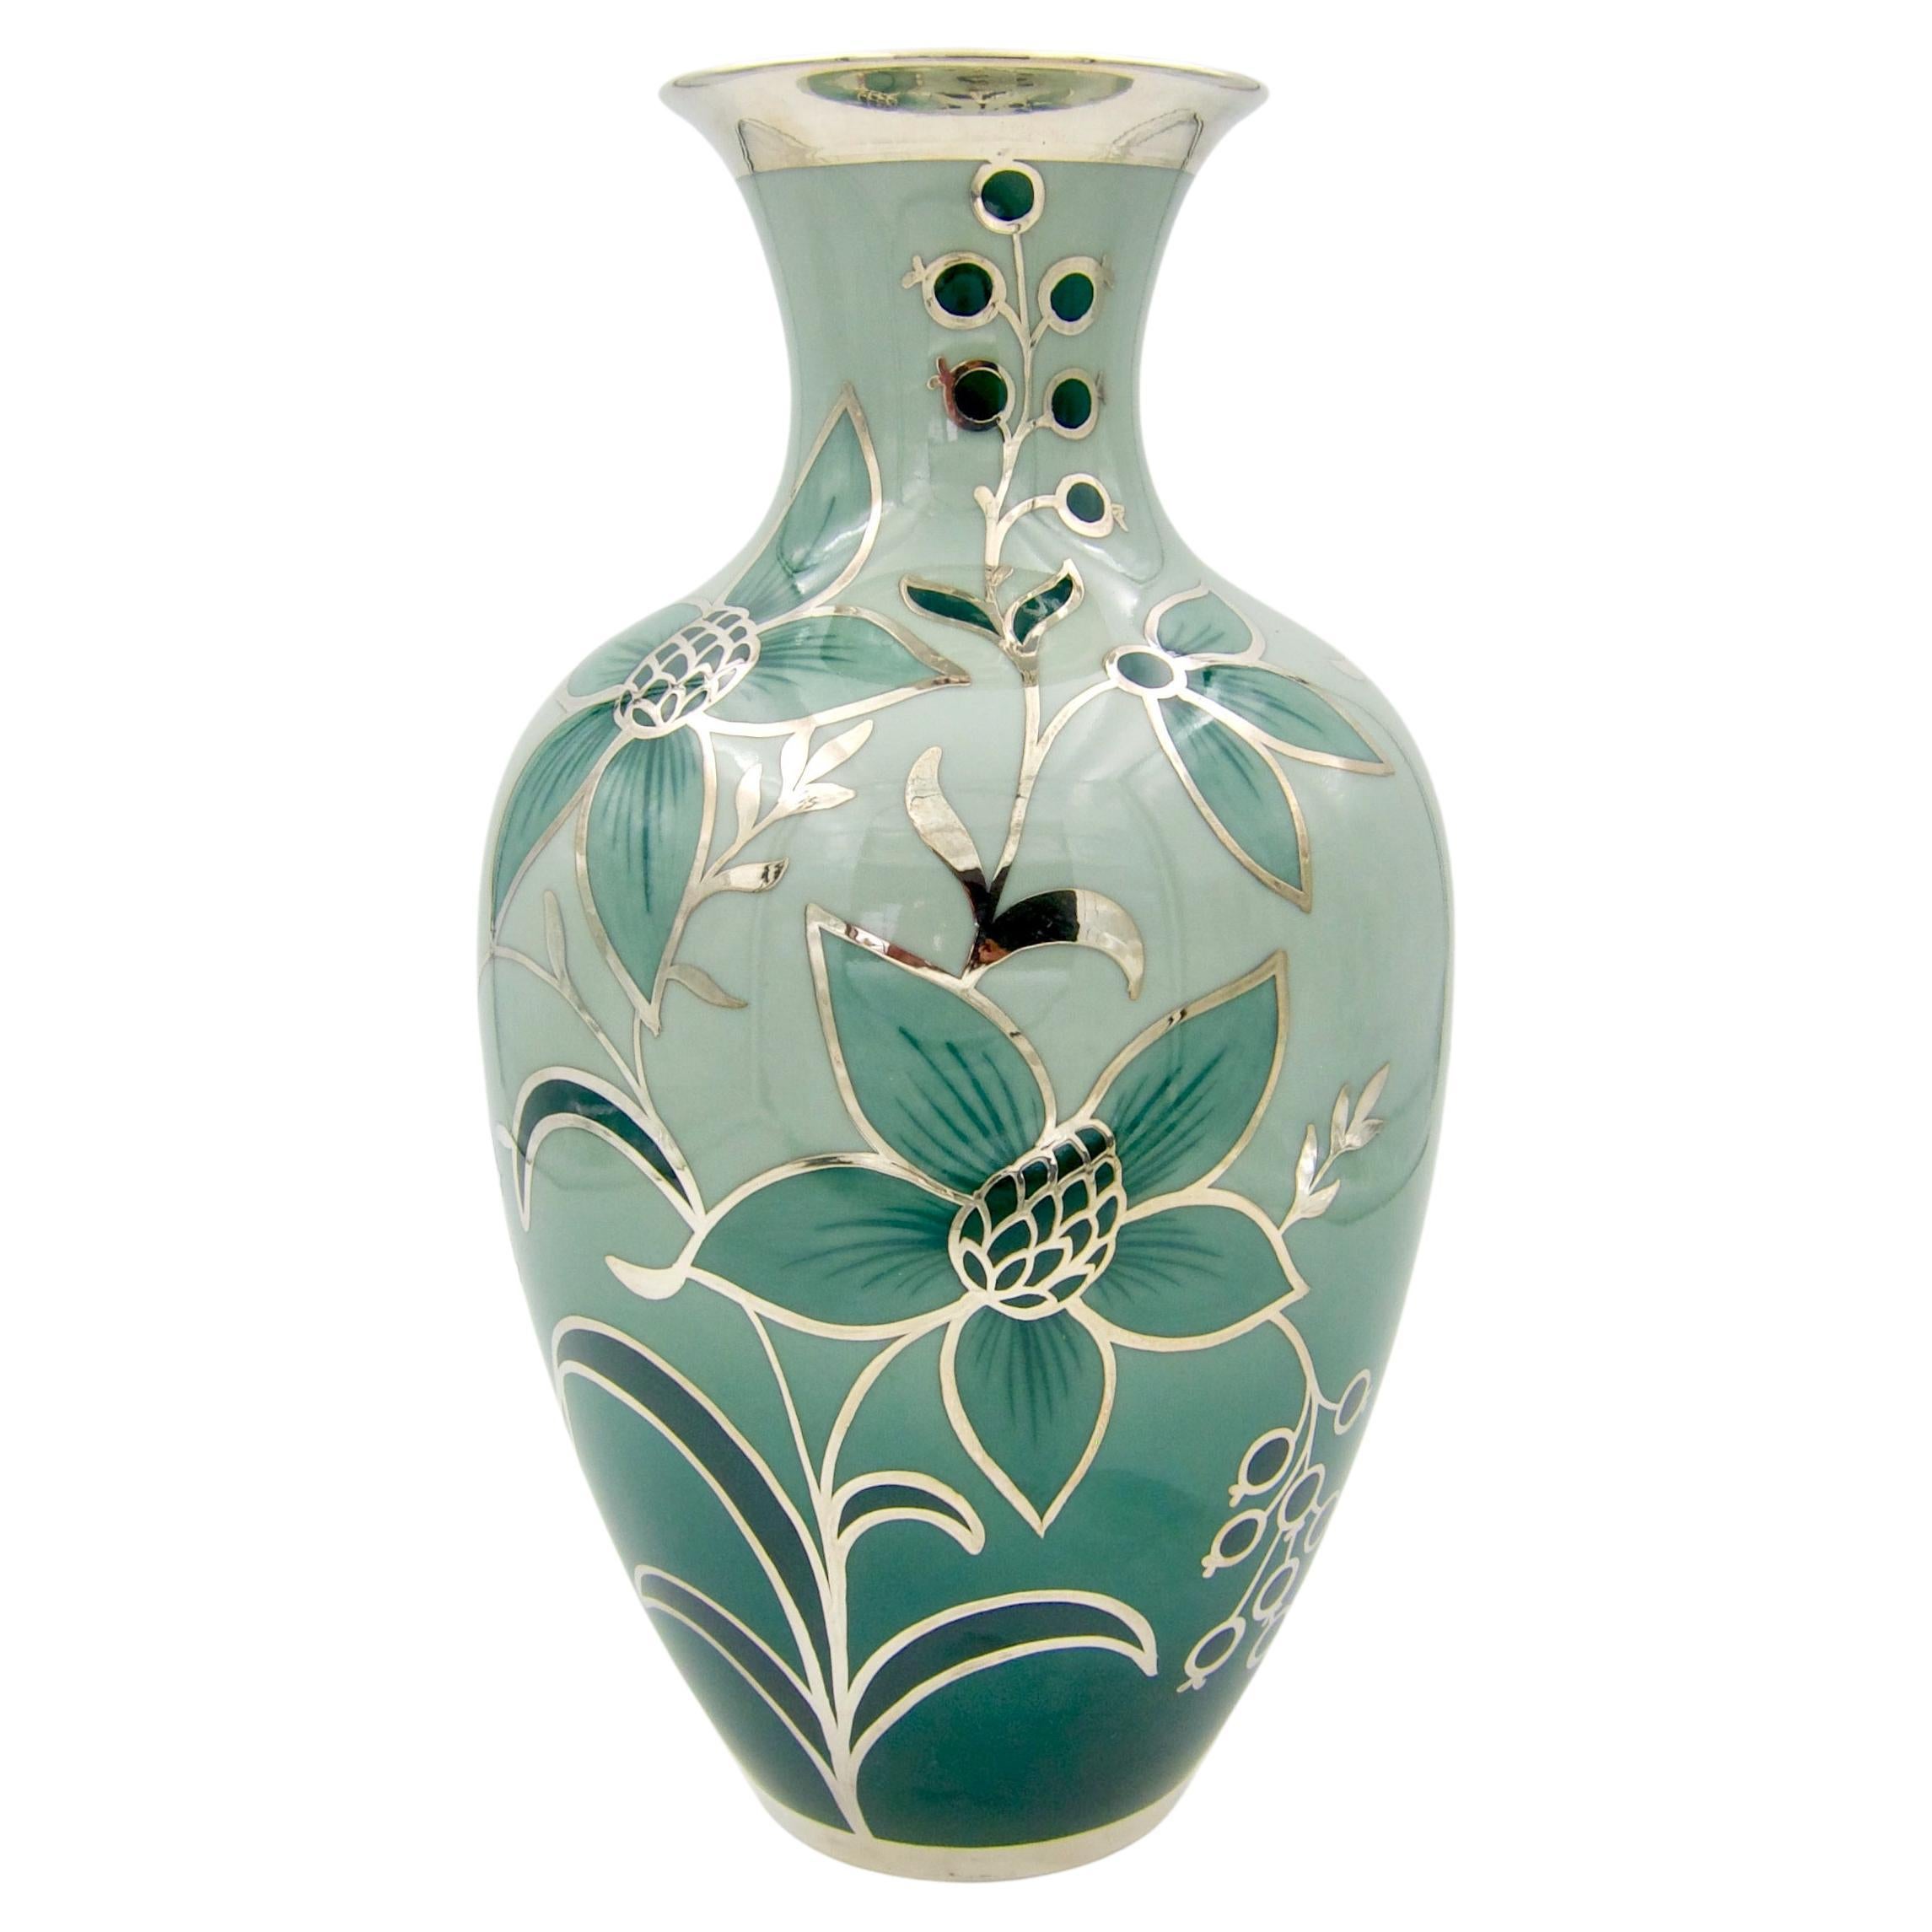 Edelstein Vases - 6 For Sale at 1stDibs